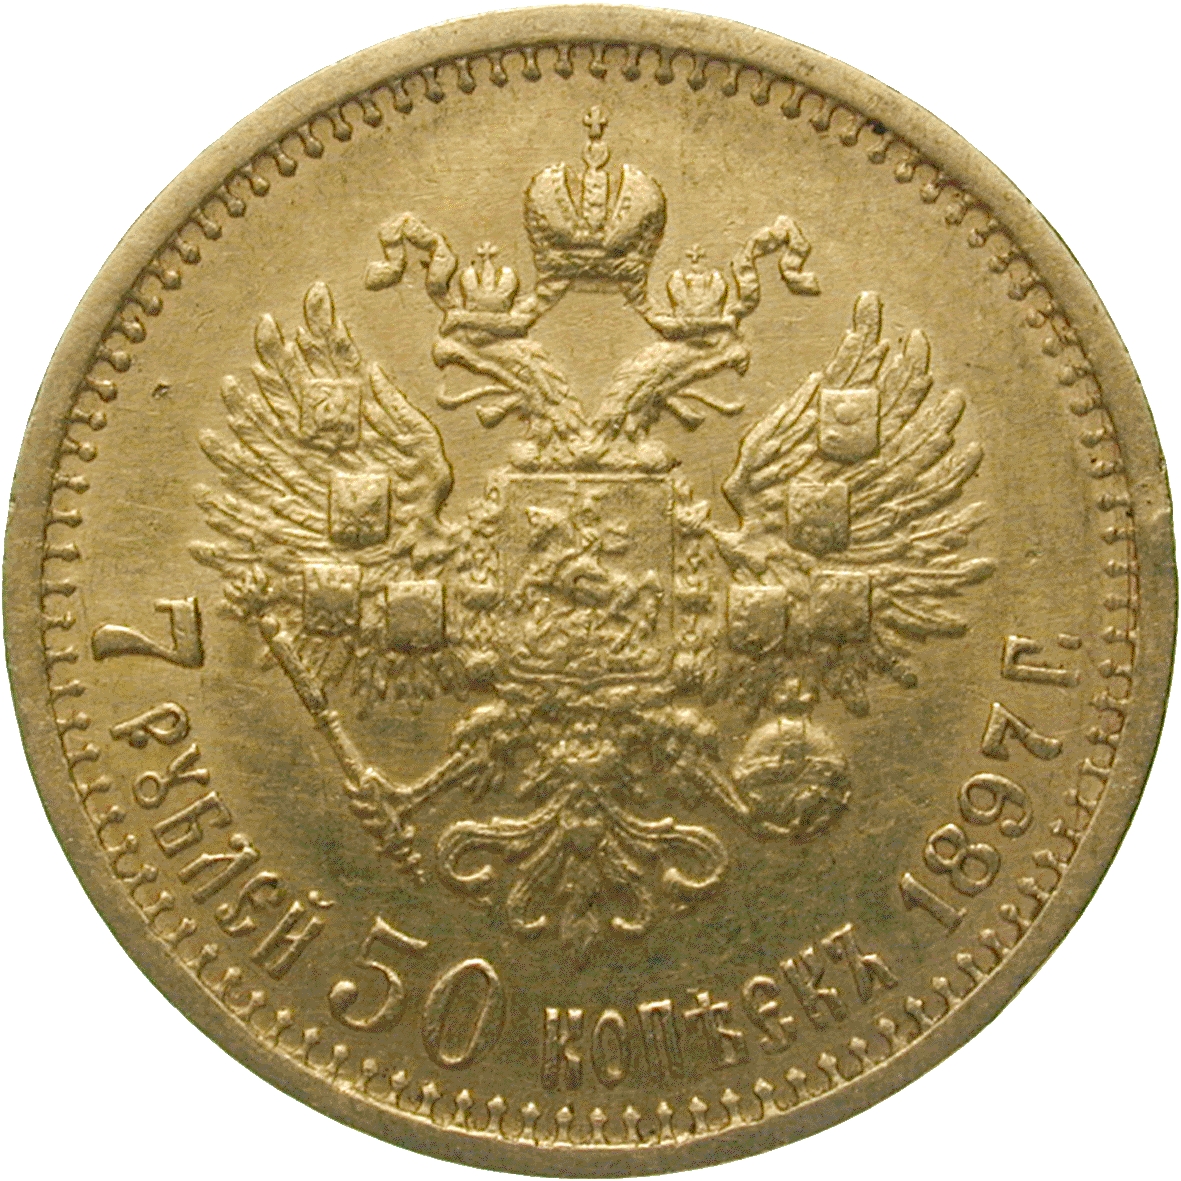 Zarenreich Russland, Nikolaus II., 7 Rubel 50 Kopeken 1897 (reverse)